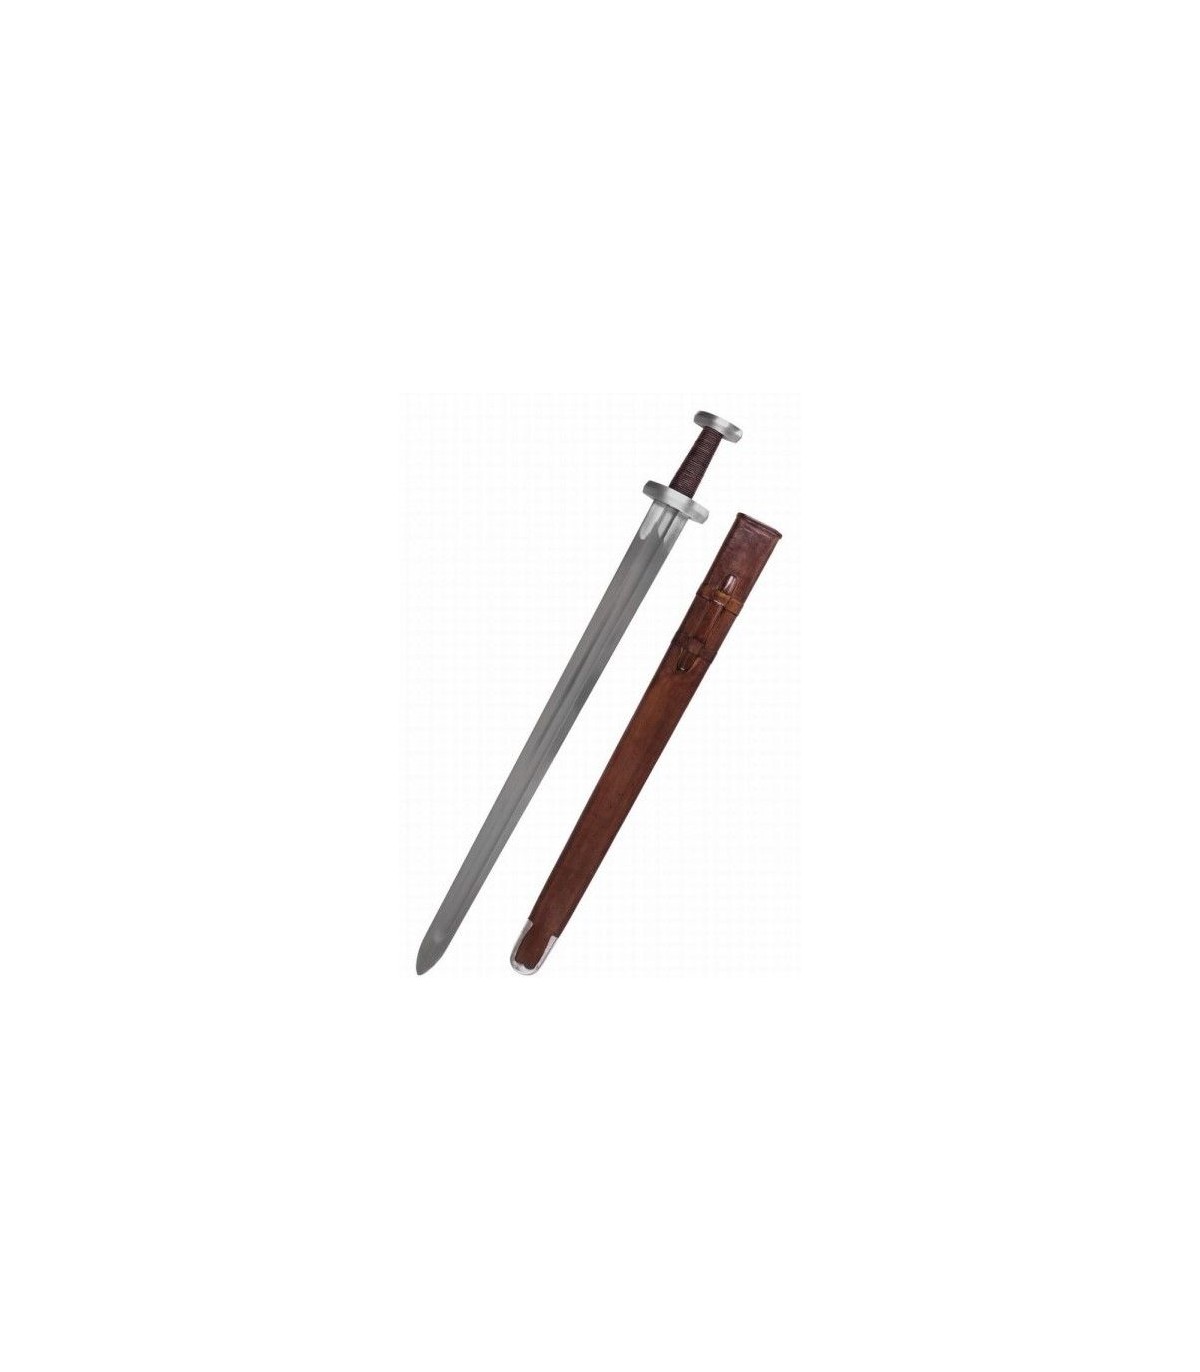 Espada vikinga clásica